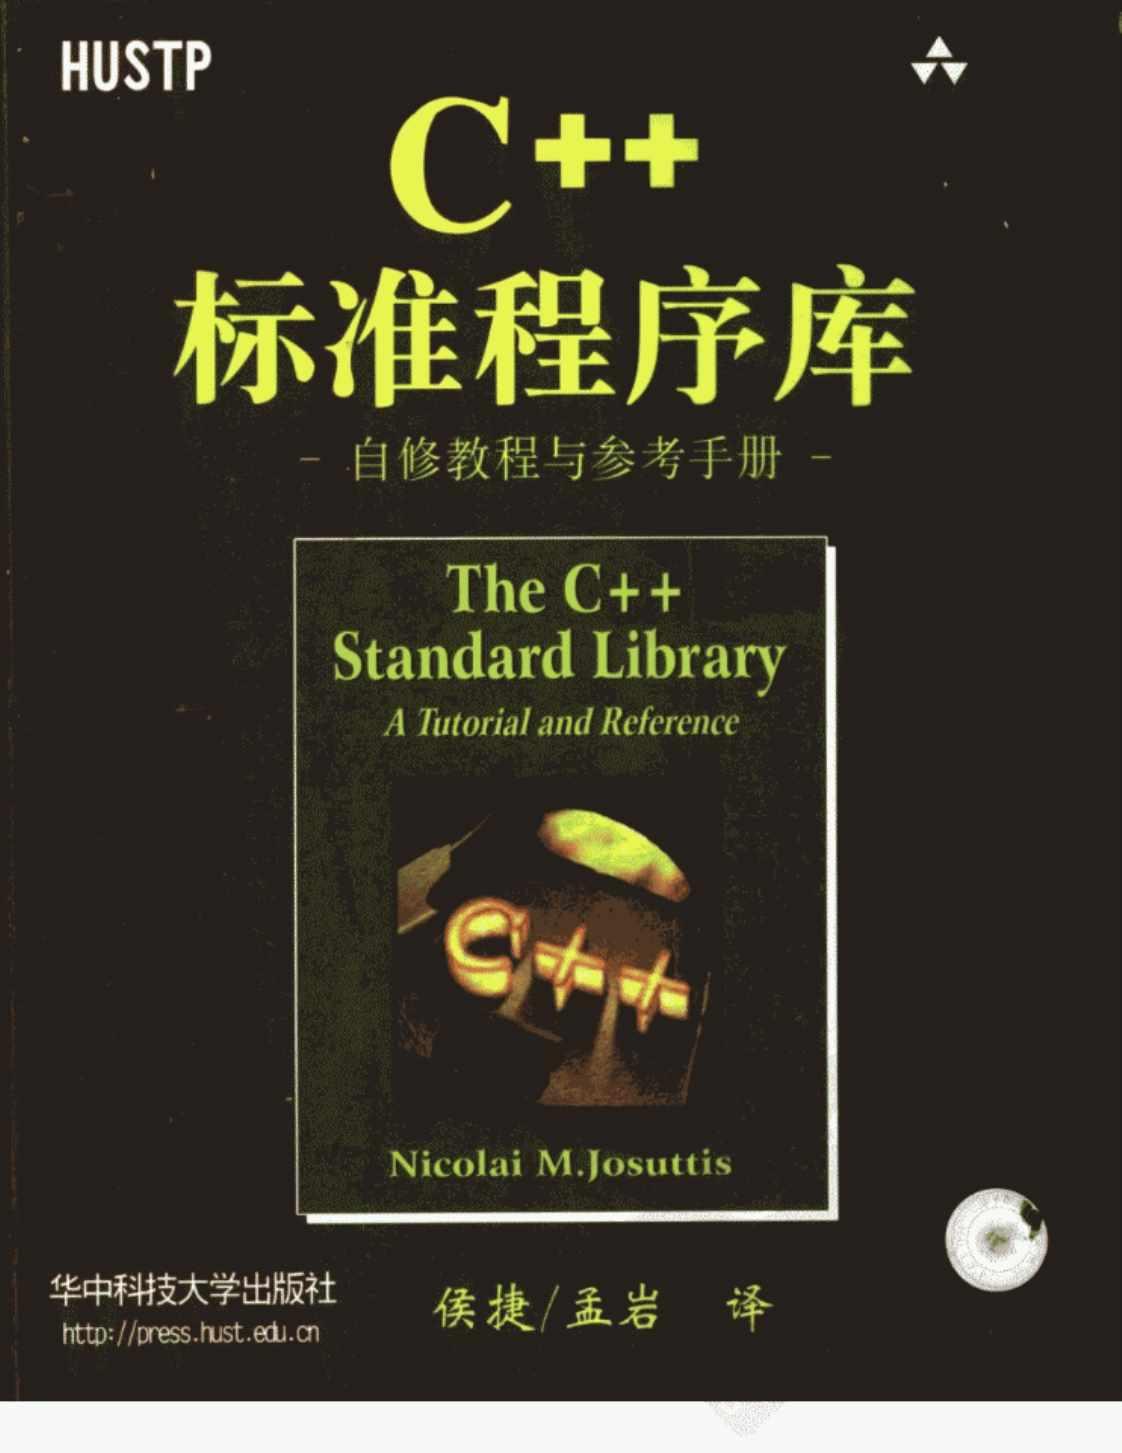 [C++标准程序库][Nicolai M.Josuttis(著)][侯捷、孟岩（译）]高清PDF电子书